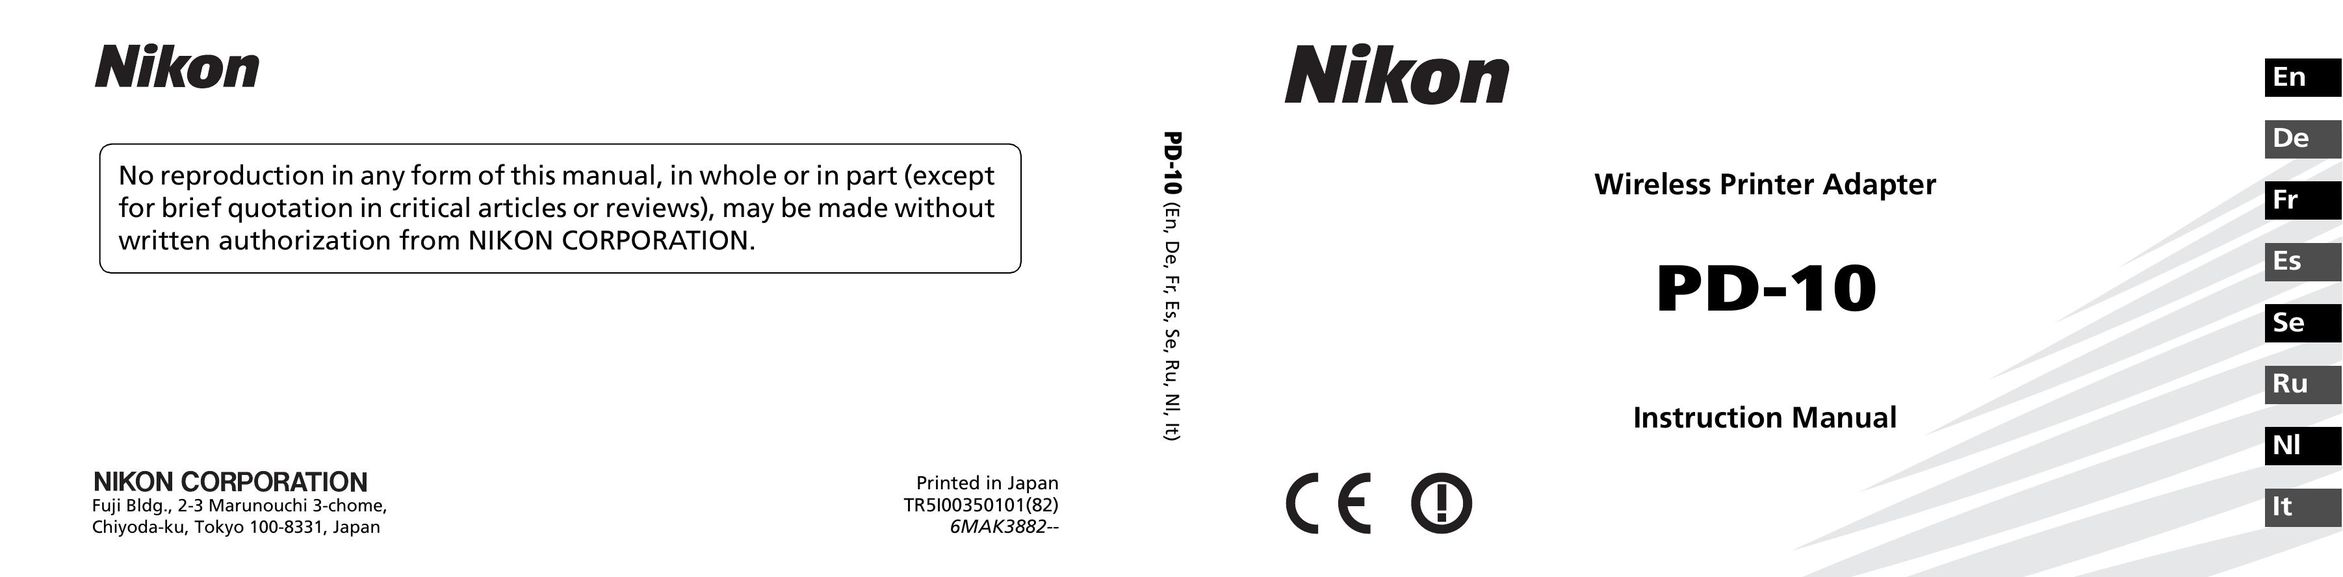 Nikon PD-10 Printer User Manual